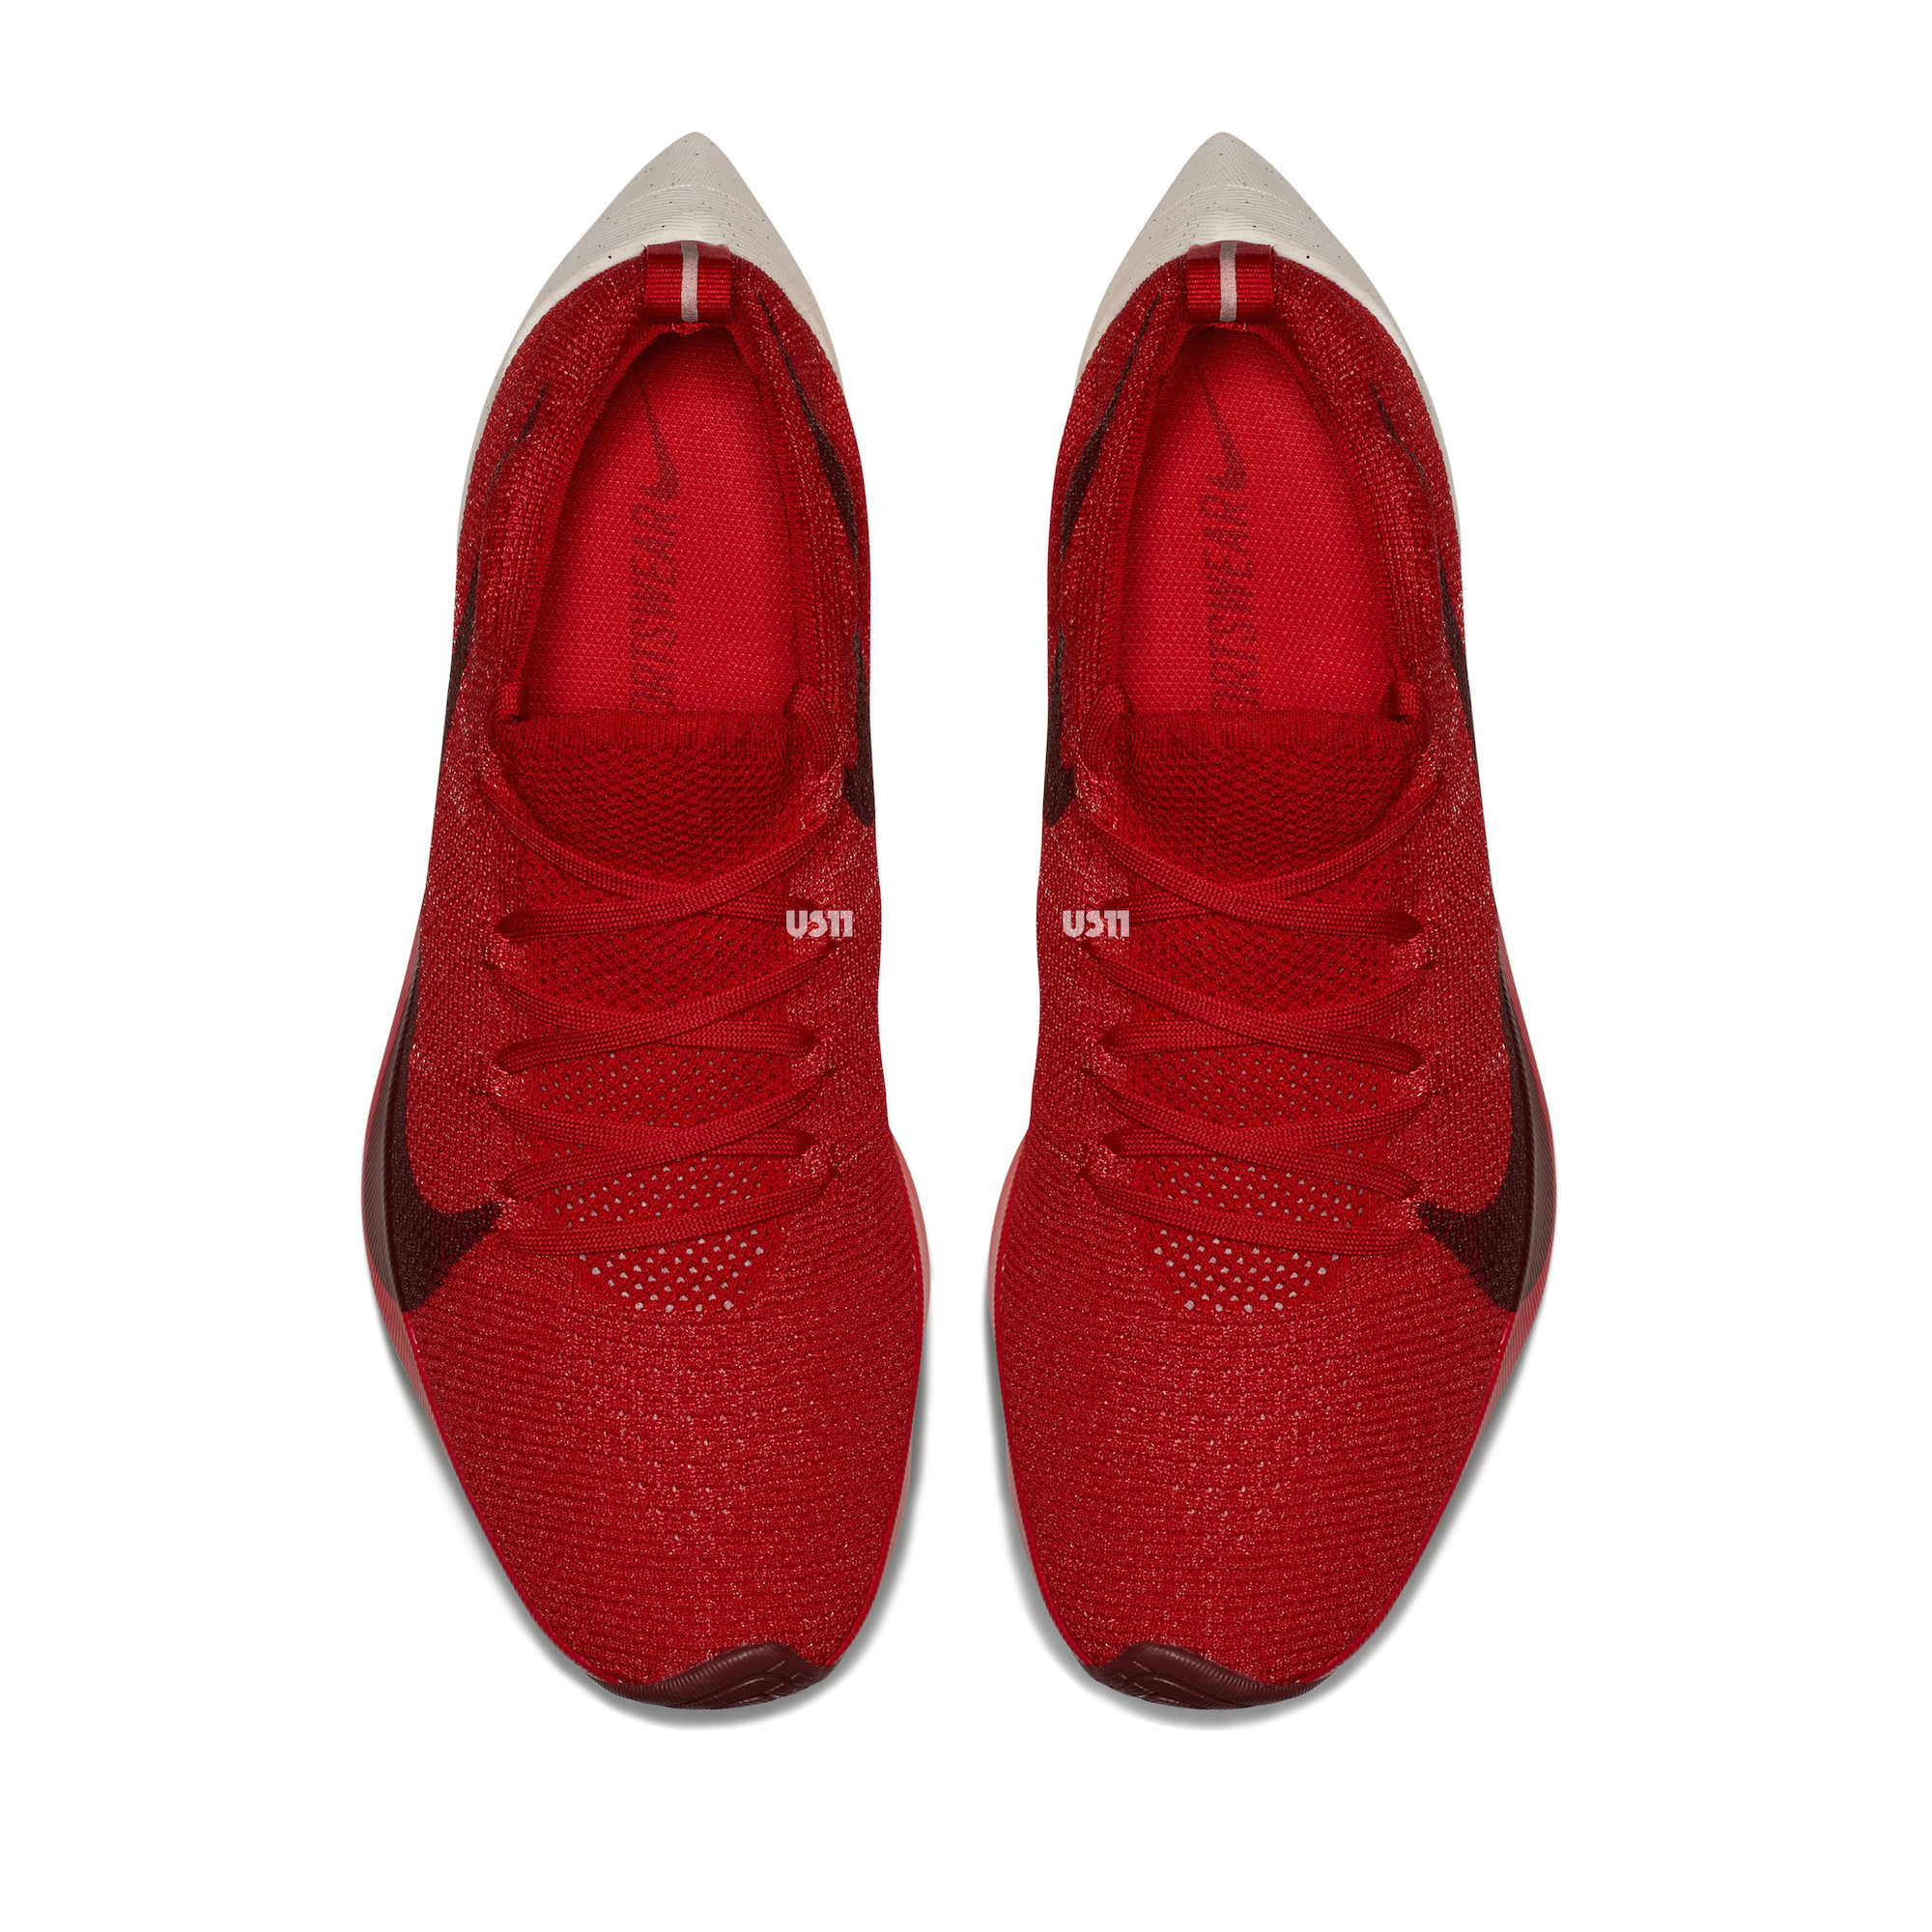 Nike-Vapor-Street-Flyknit-red-2.jpg